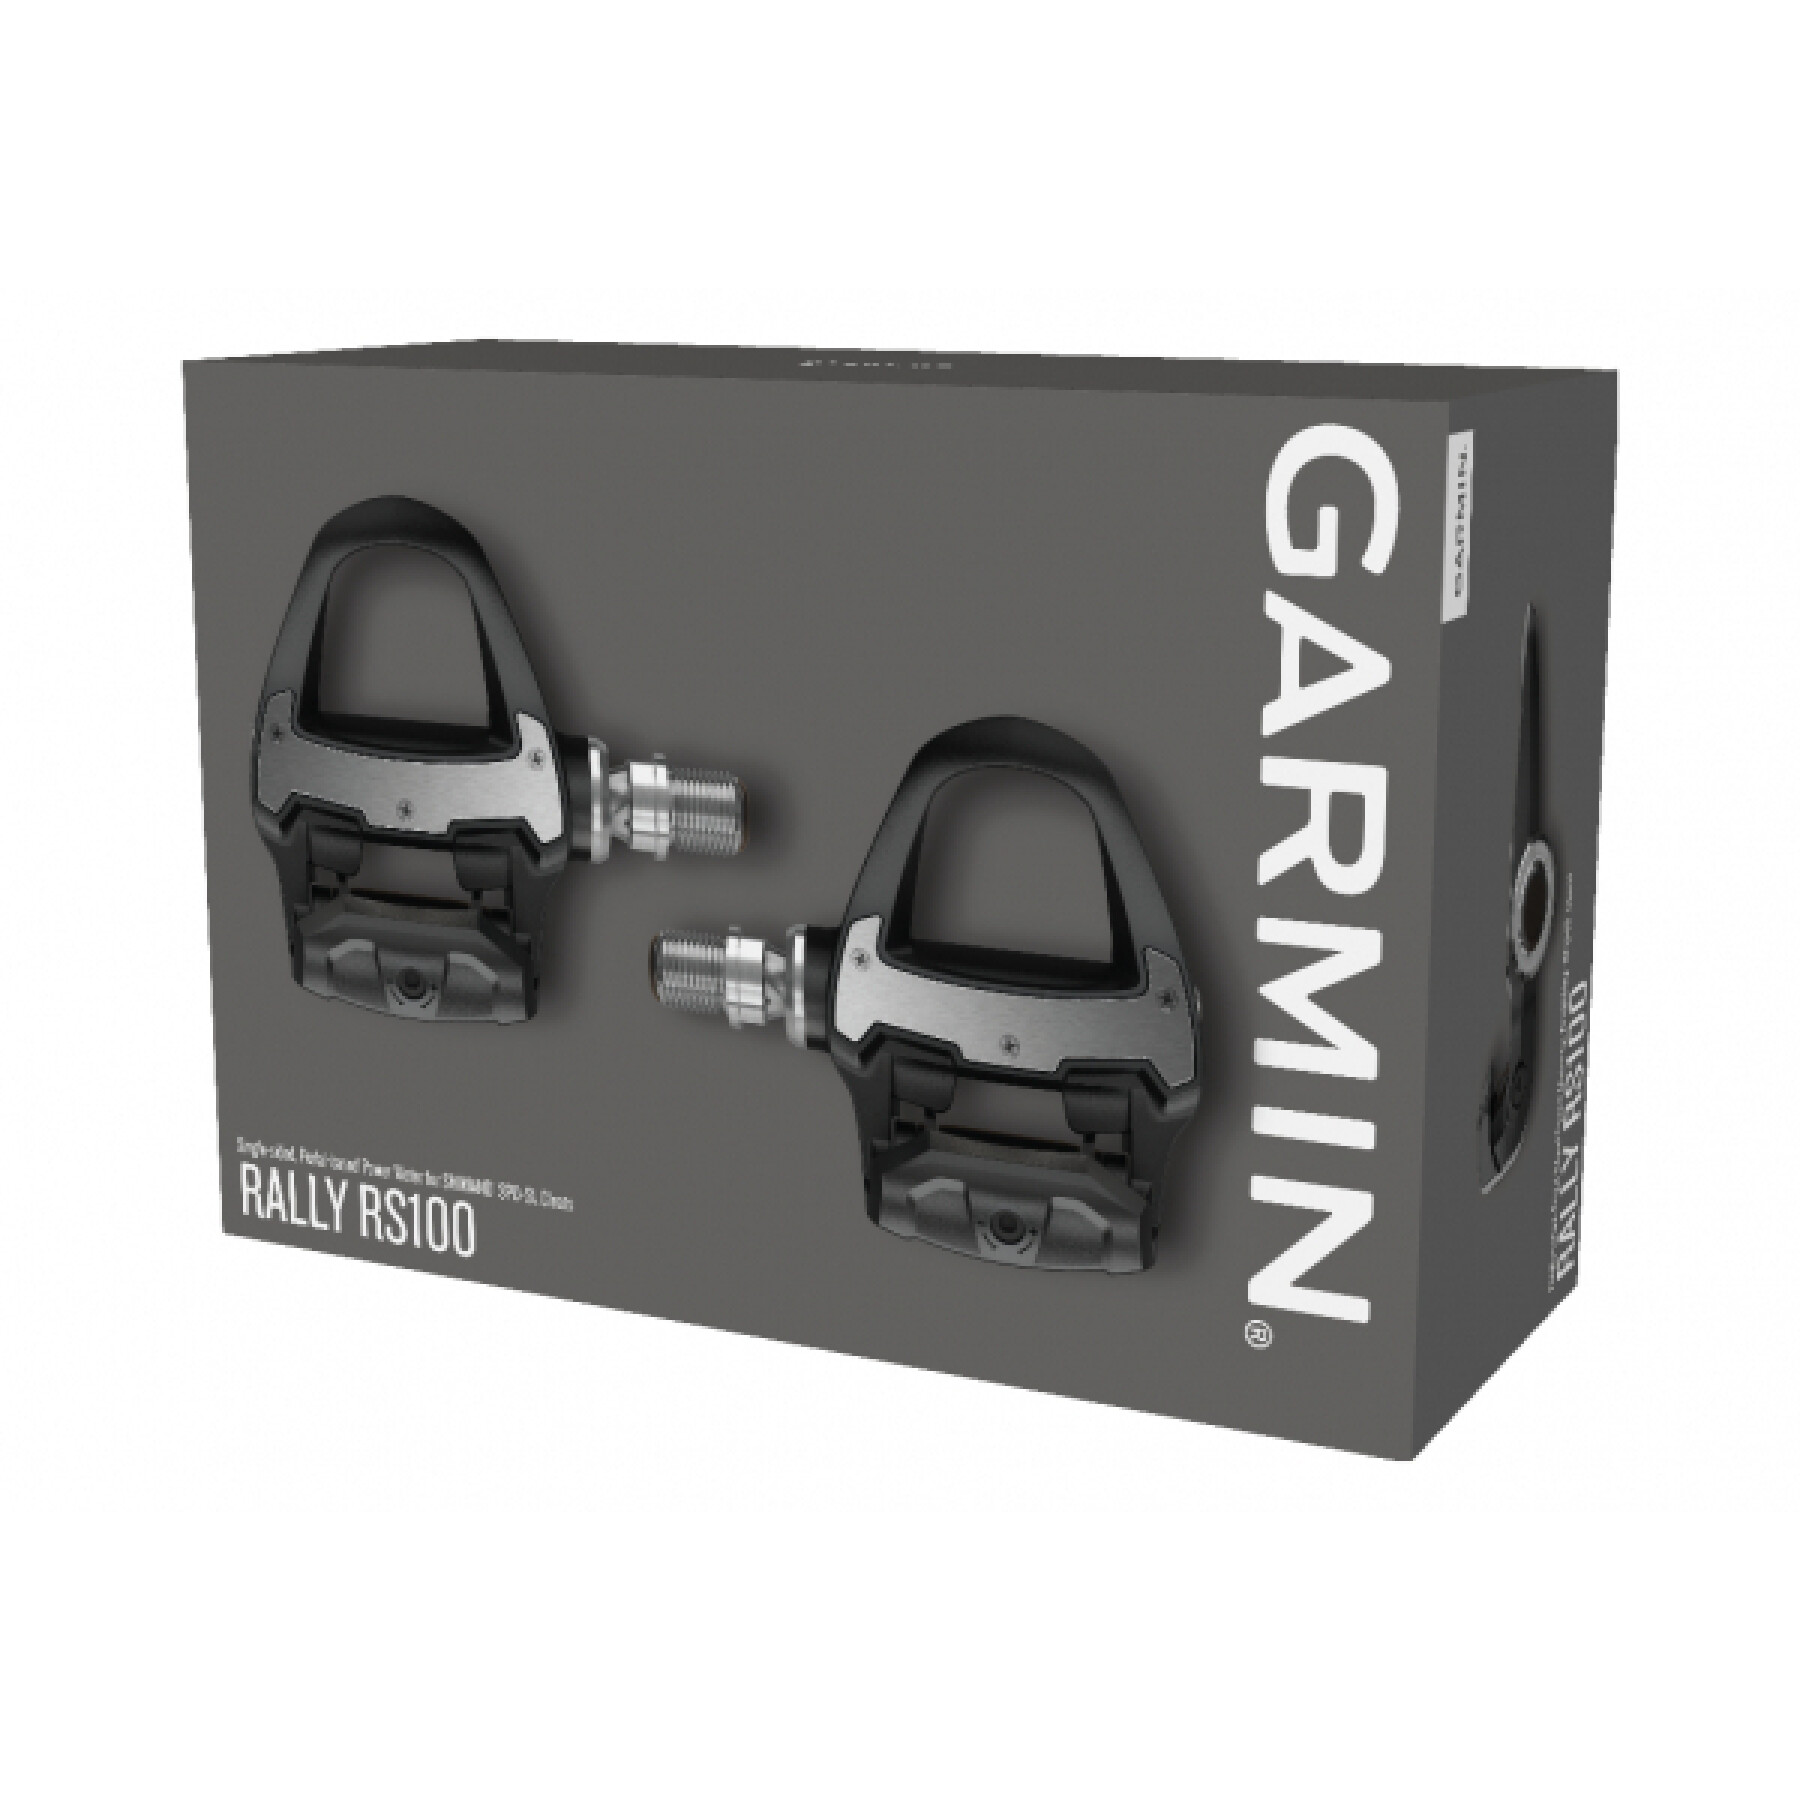 Sensor de potencia Garmin Rally rk 100 look kéo type